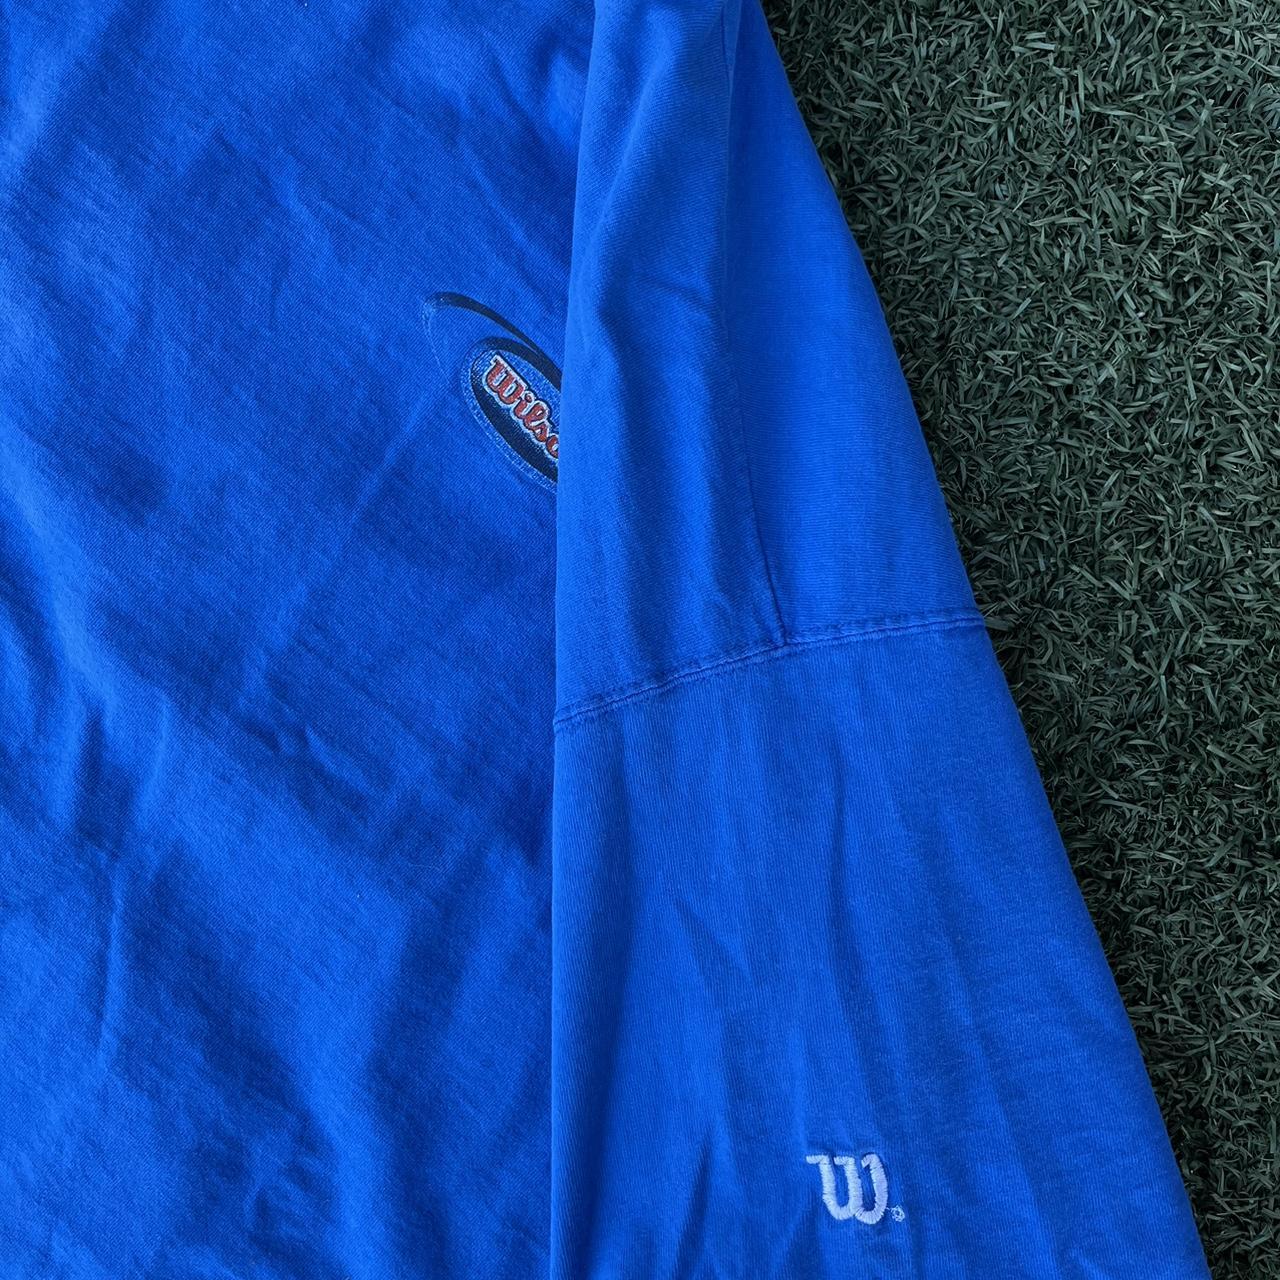 Wilson’s Leather Men's Blue T-shirt (3)